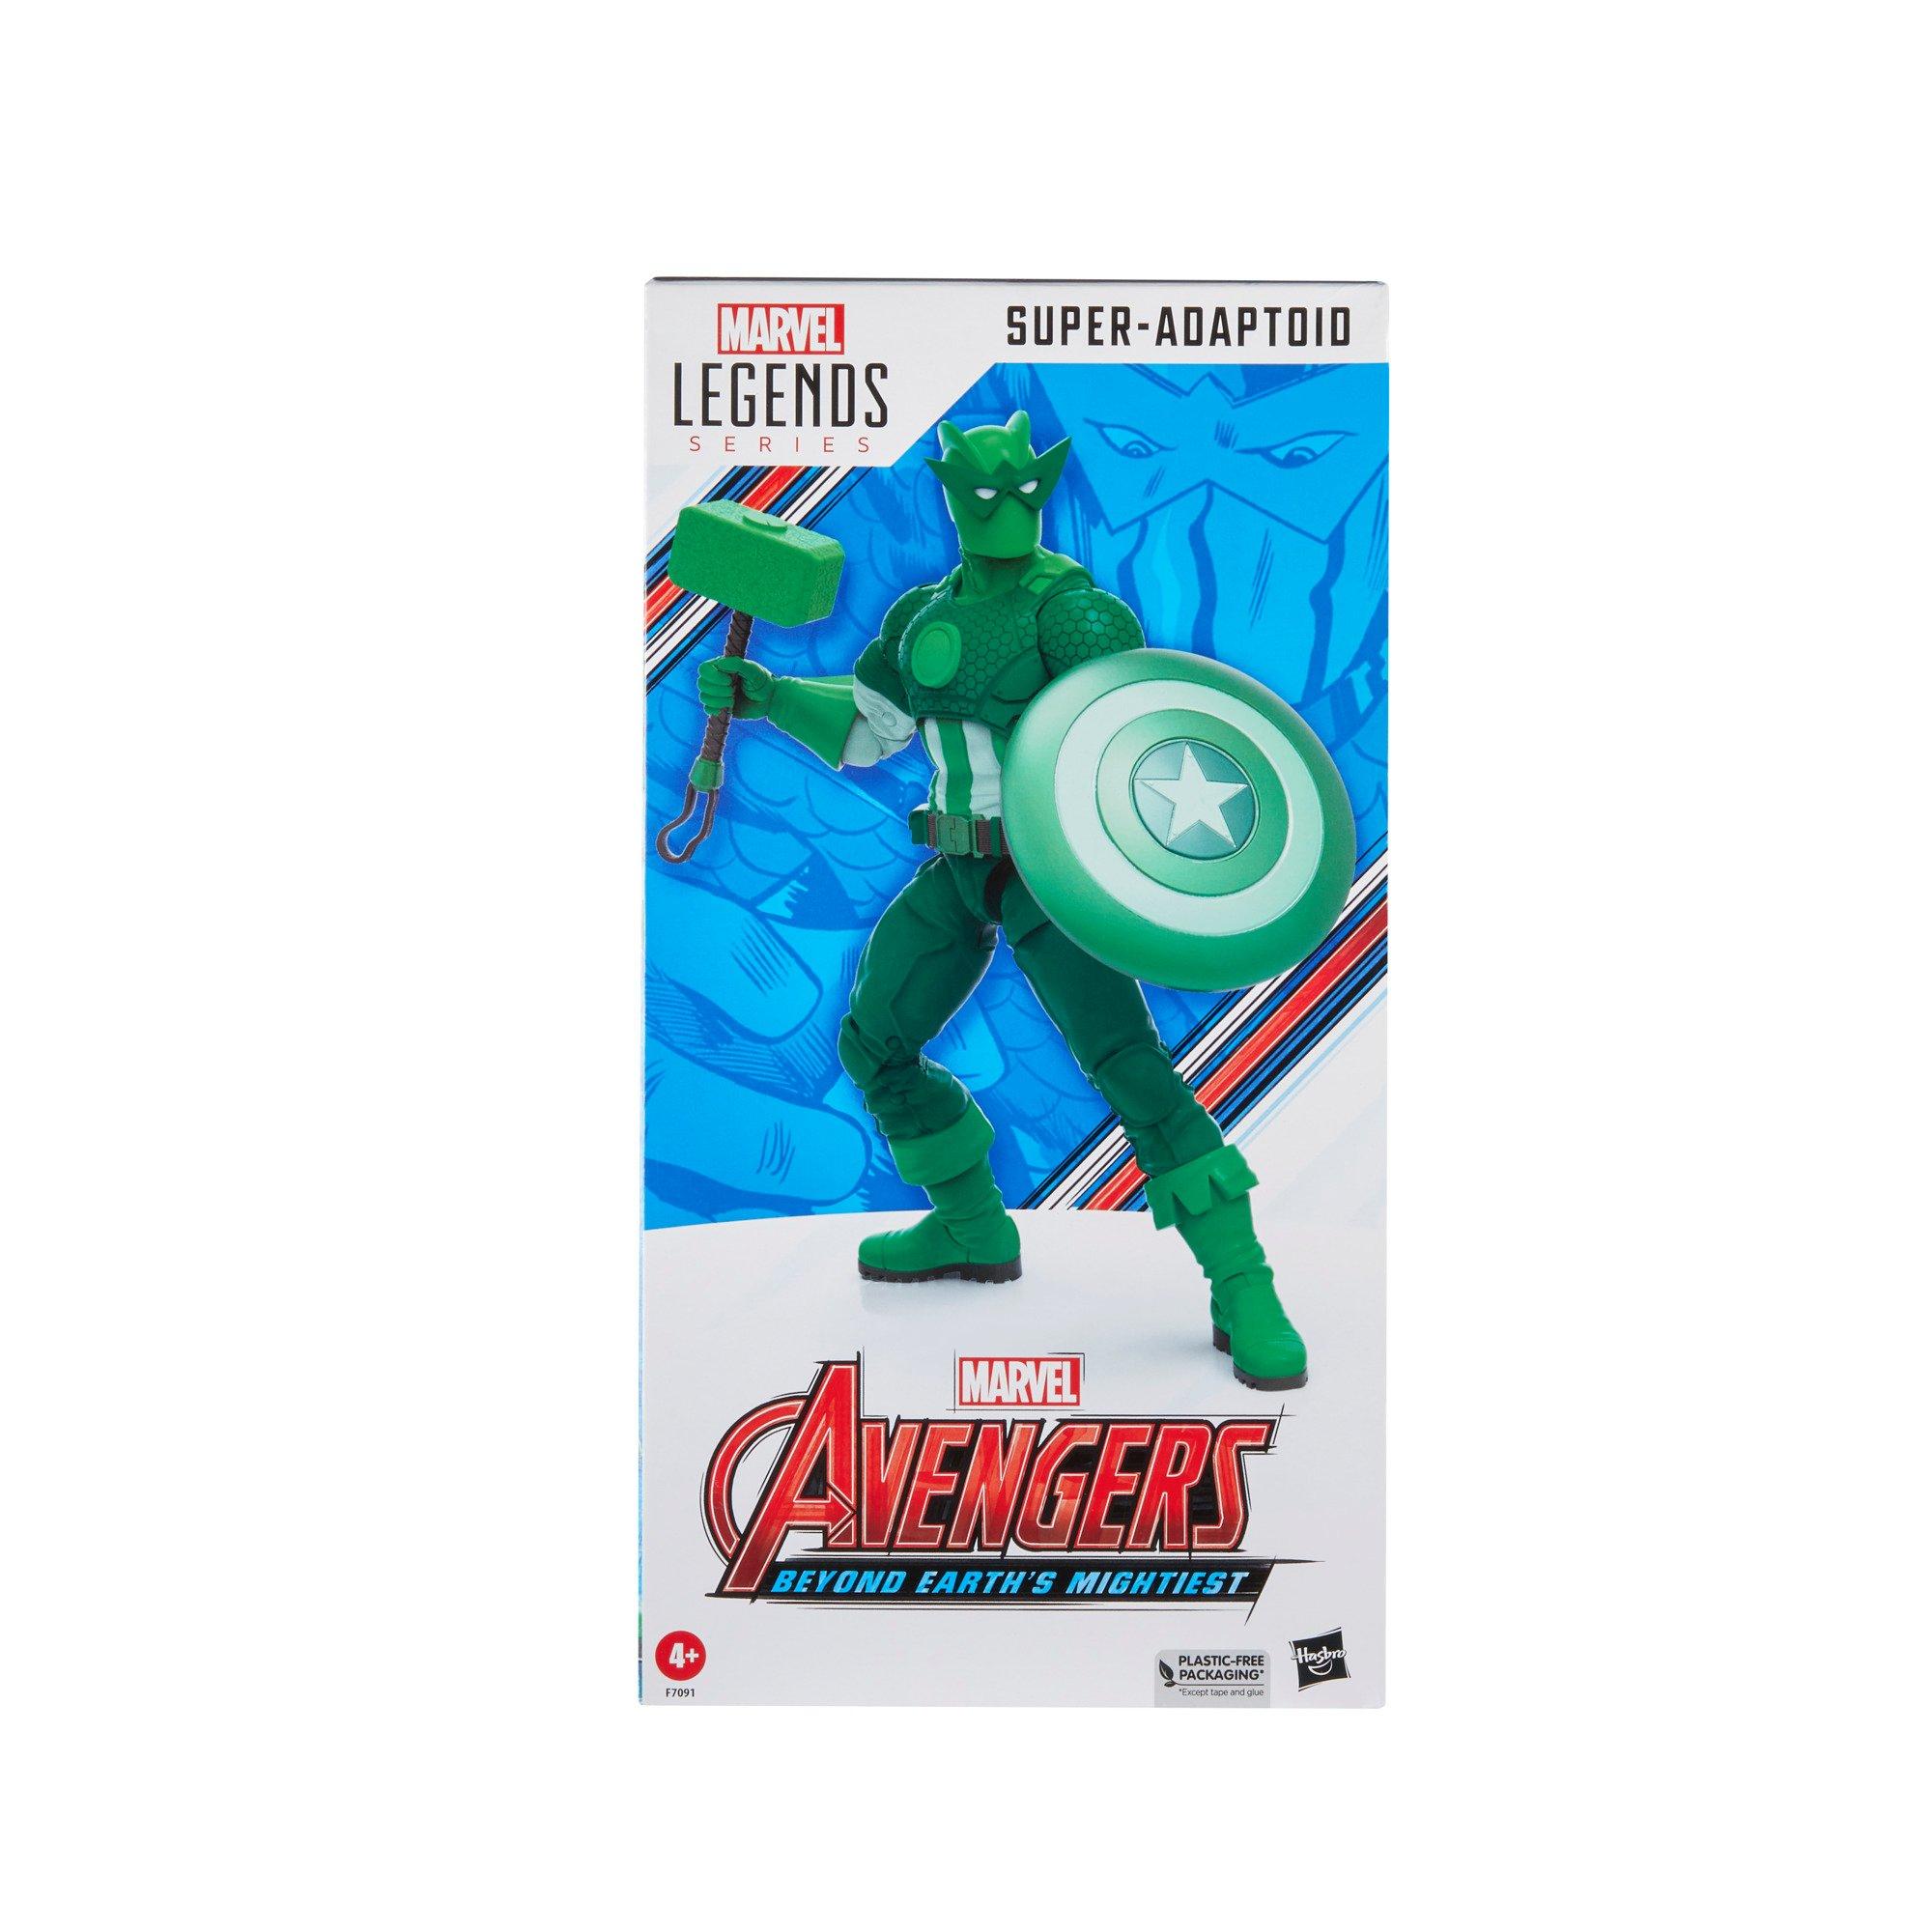 Hasbro Marvel Legends Series Marvel Avengers: Beyond Earth's Mightiest Super-Adaptoid 12-in Action Figure